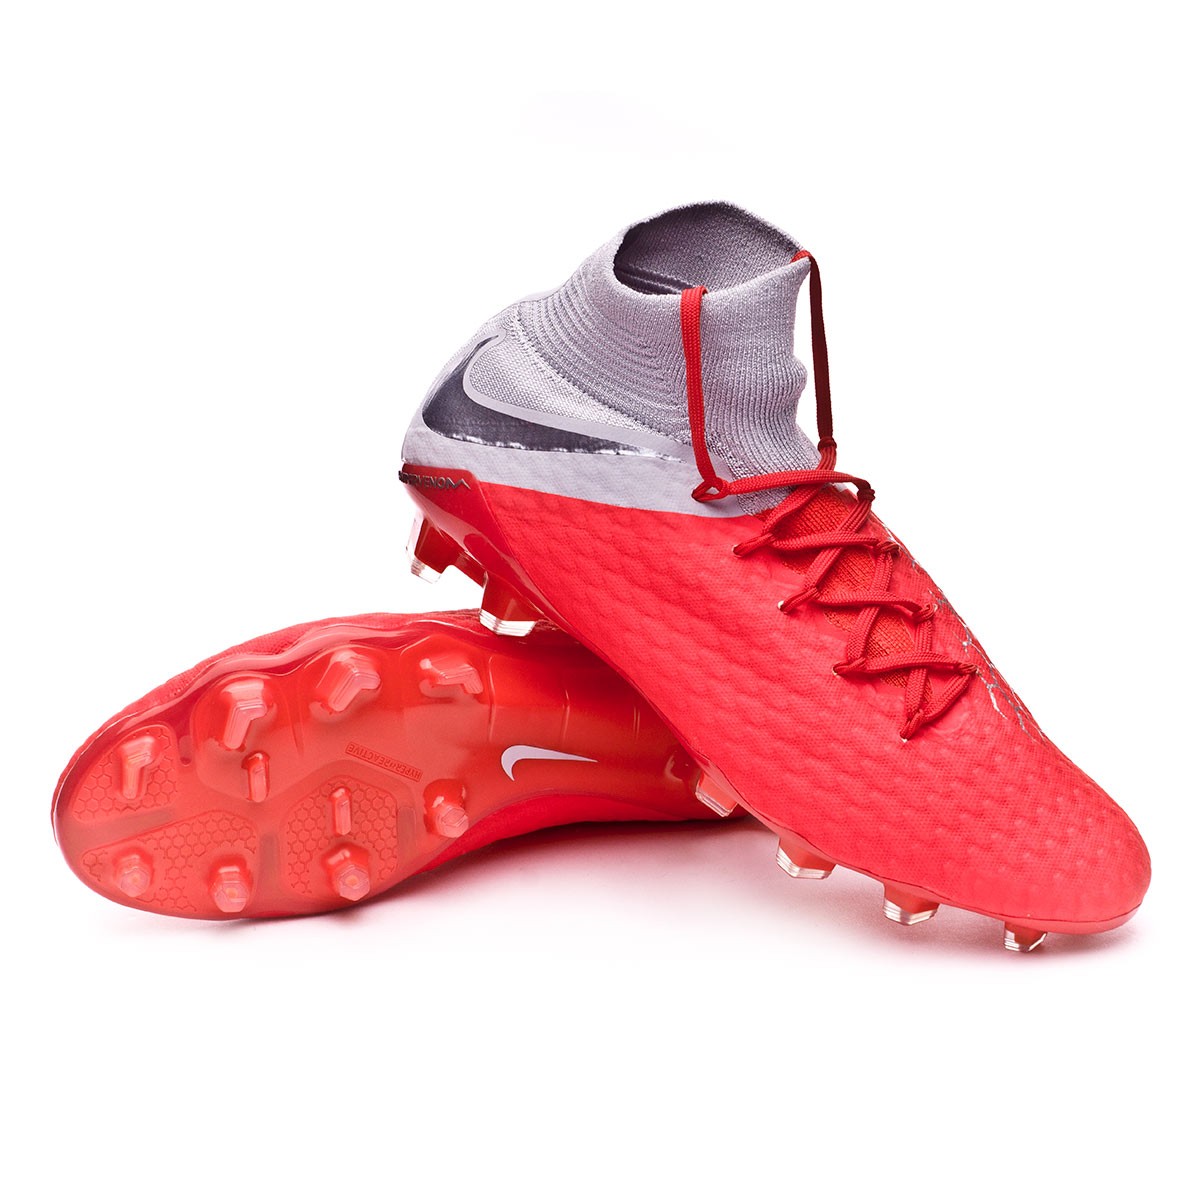 Football Boots Nike Hypervenom Phantom III Pro DF FG Light crimson-Metallic  dark grey-Wolf grey - Football store Fútbol Emotion